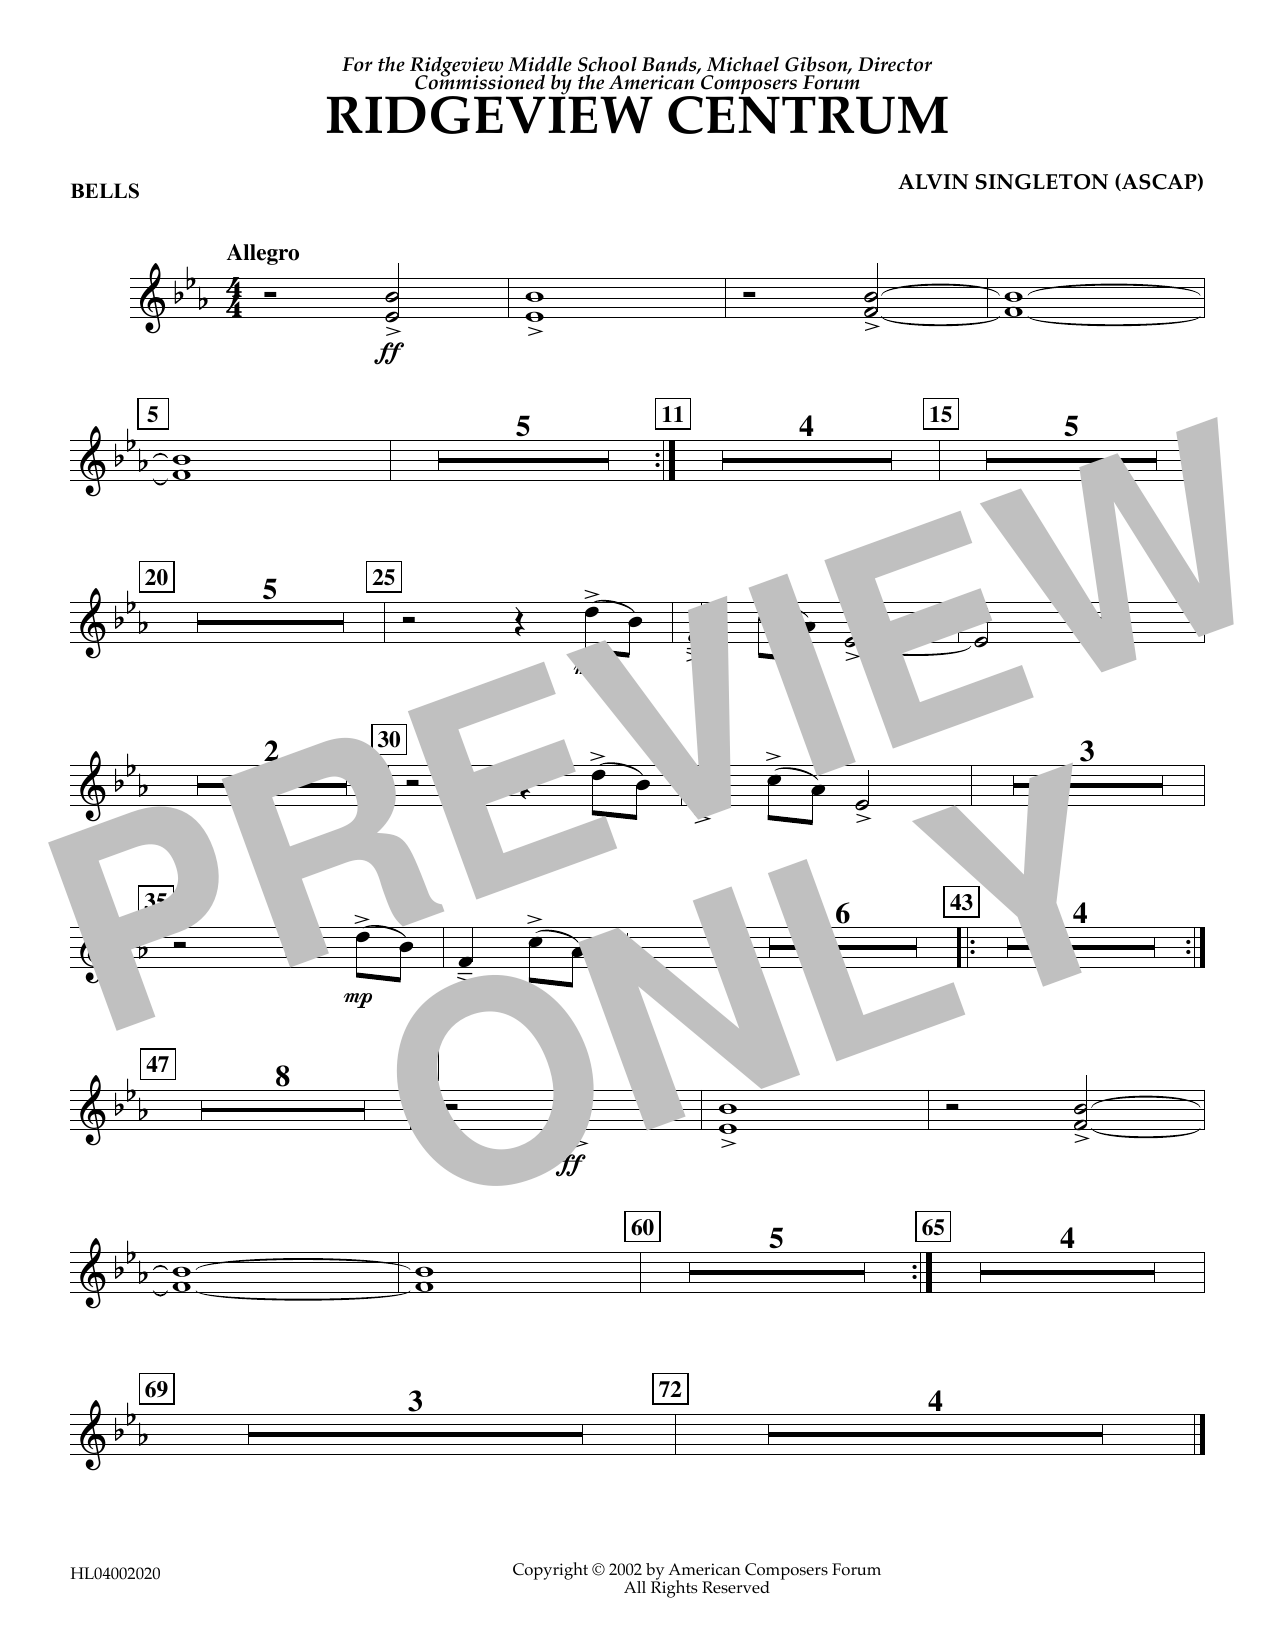 Alvin Singleton Ridgeview Centrum - Bells Sheet Music Notes & Chords for Concert Band - Download or Print PDF